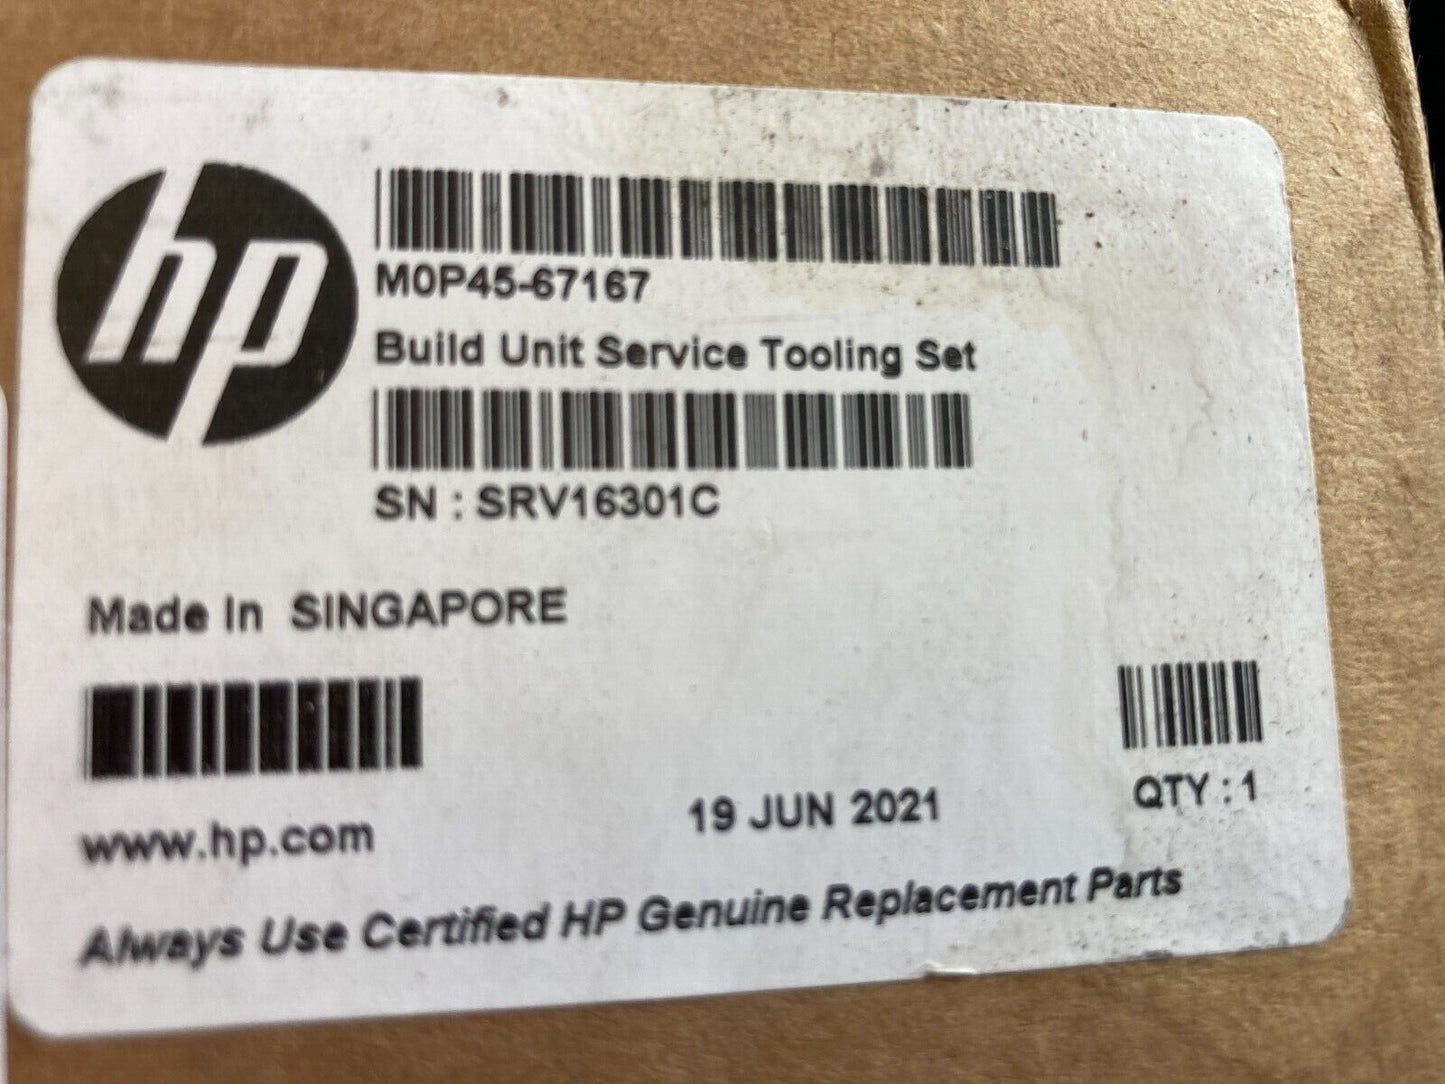 NEW GENUINE HP M0P45-67167 Build Unit Serice Tooling Set JET FUSION 3D PRINTER